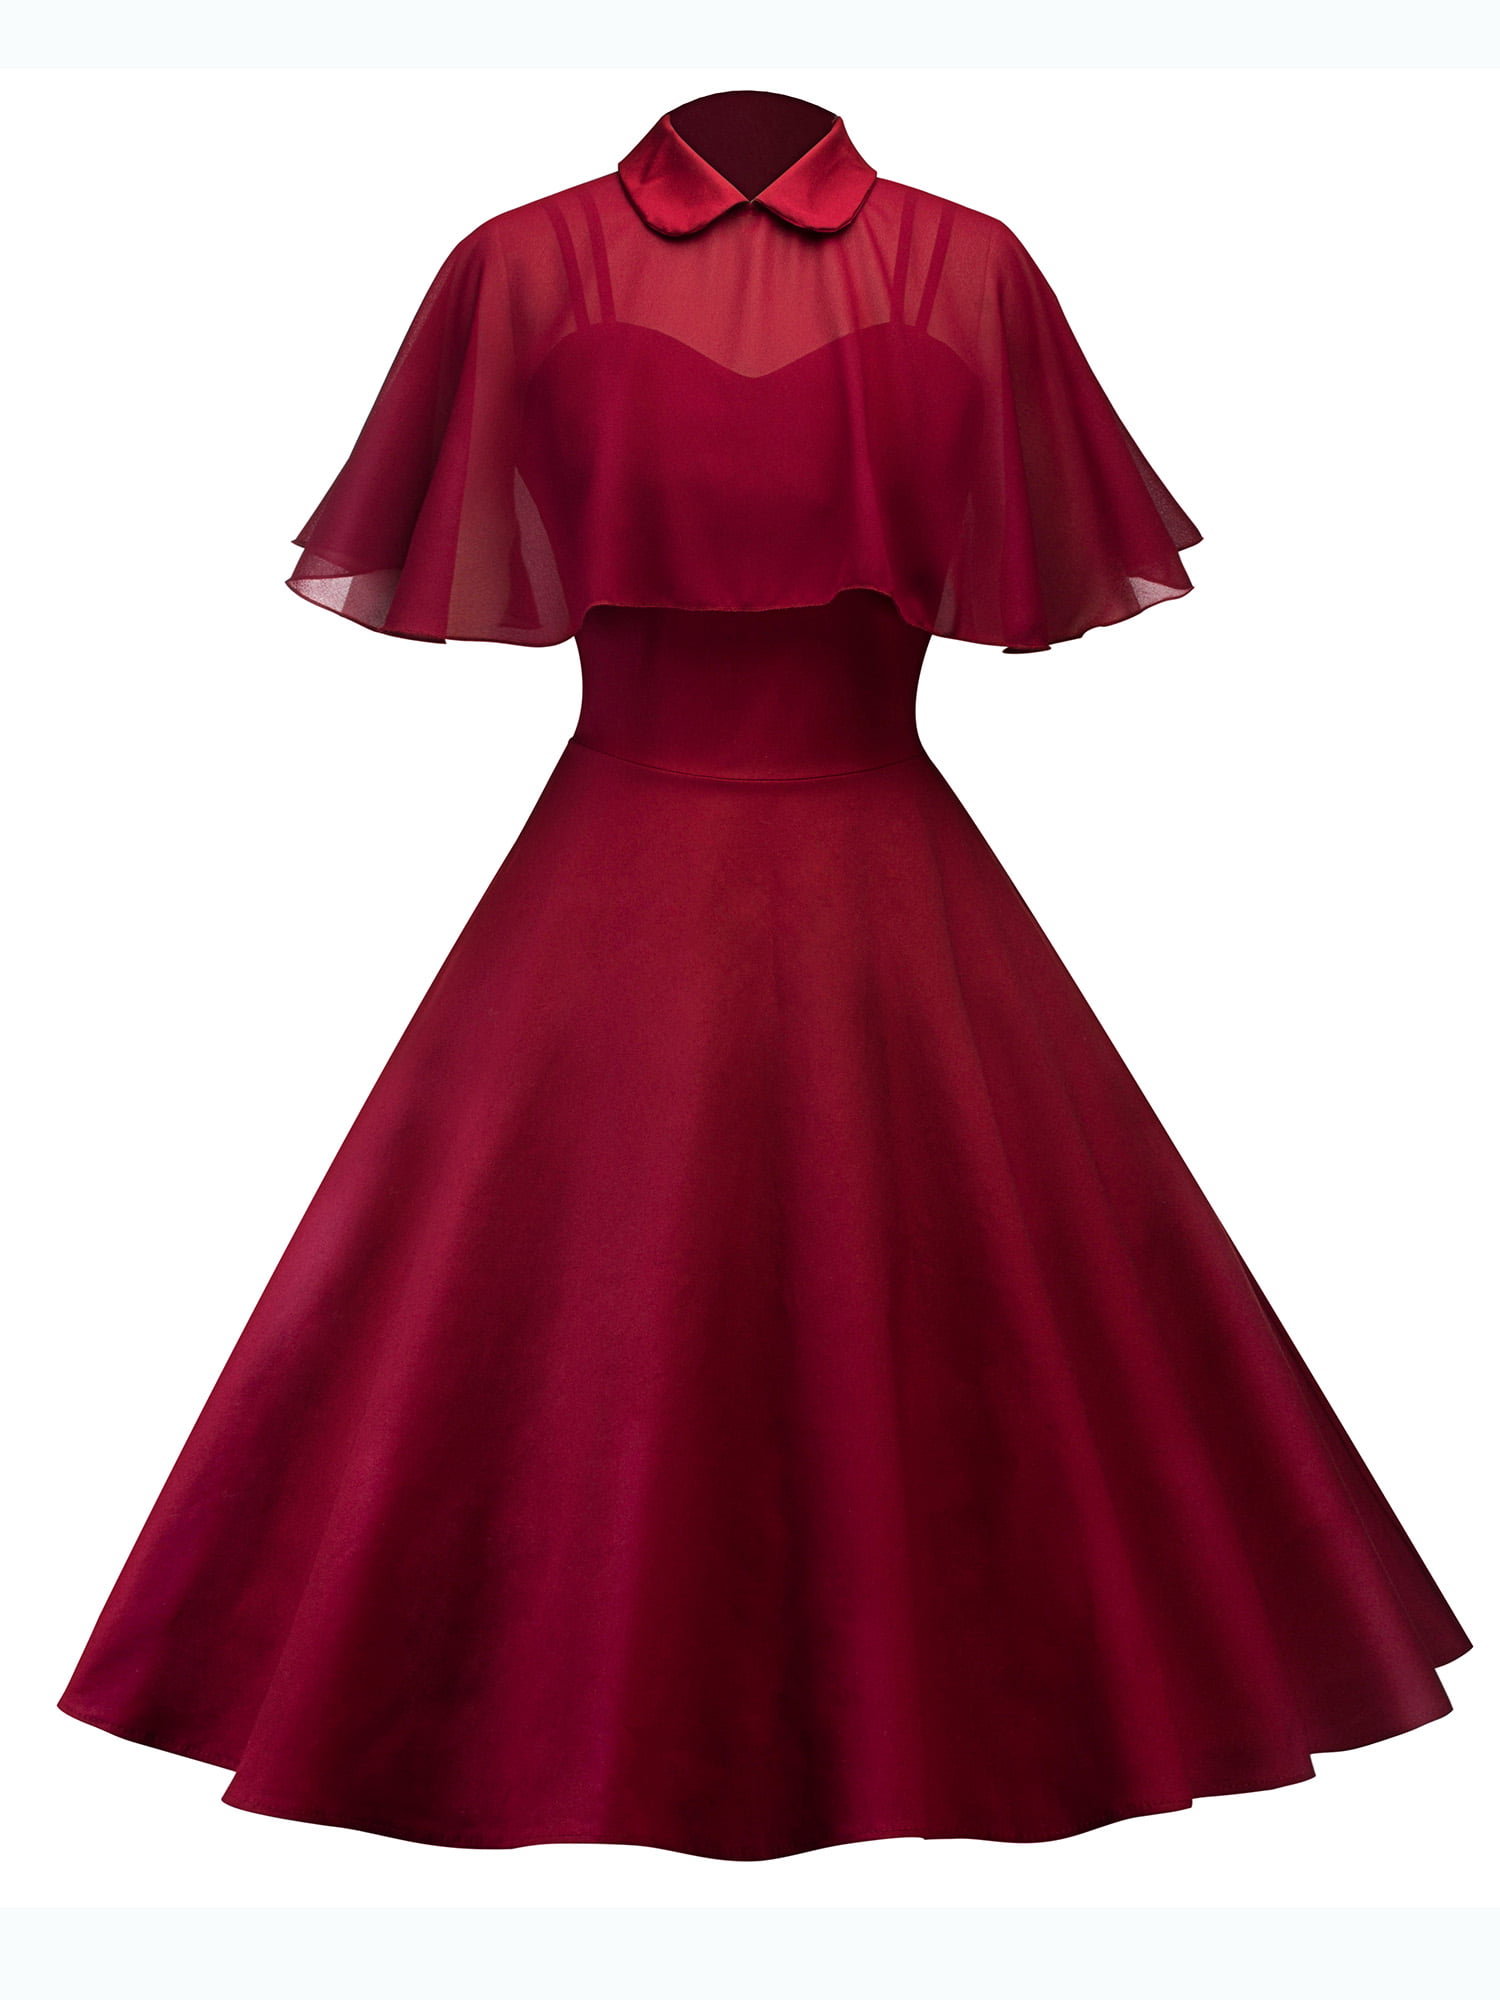 Blush pink formal gown dress 1960s plus size vintage